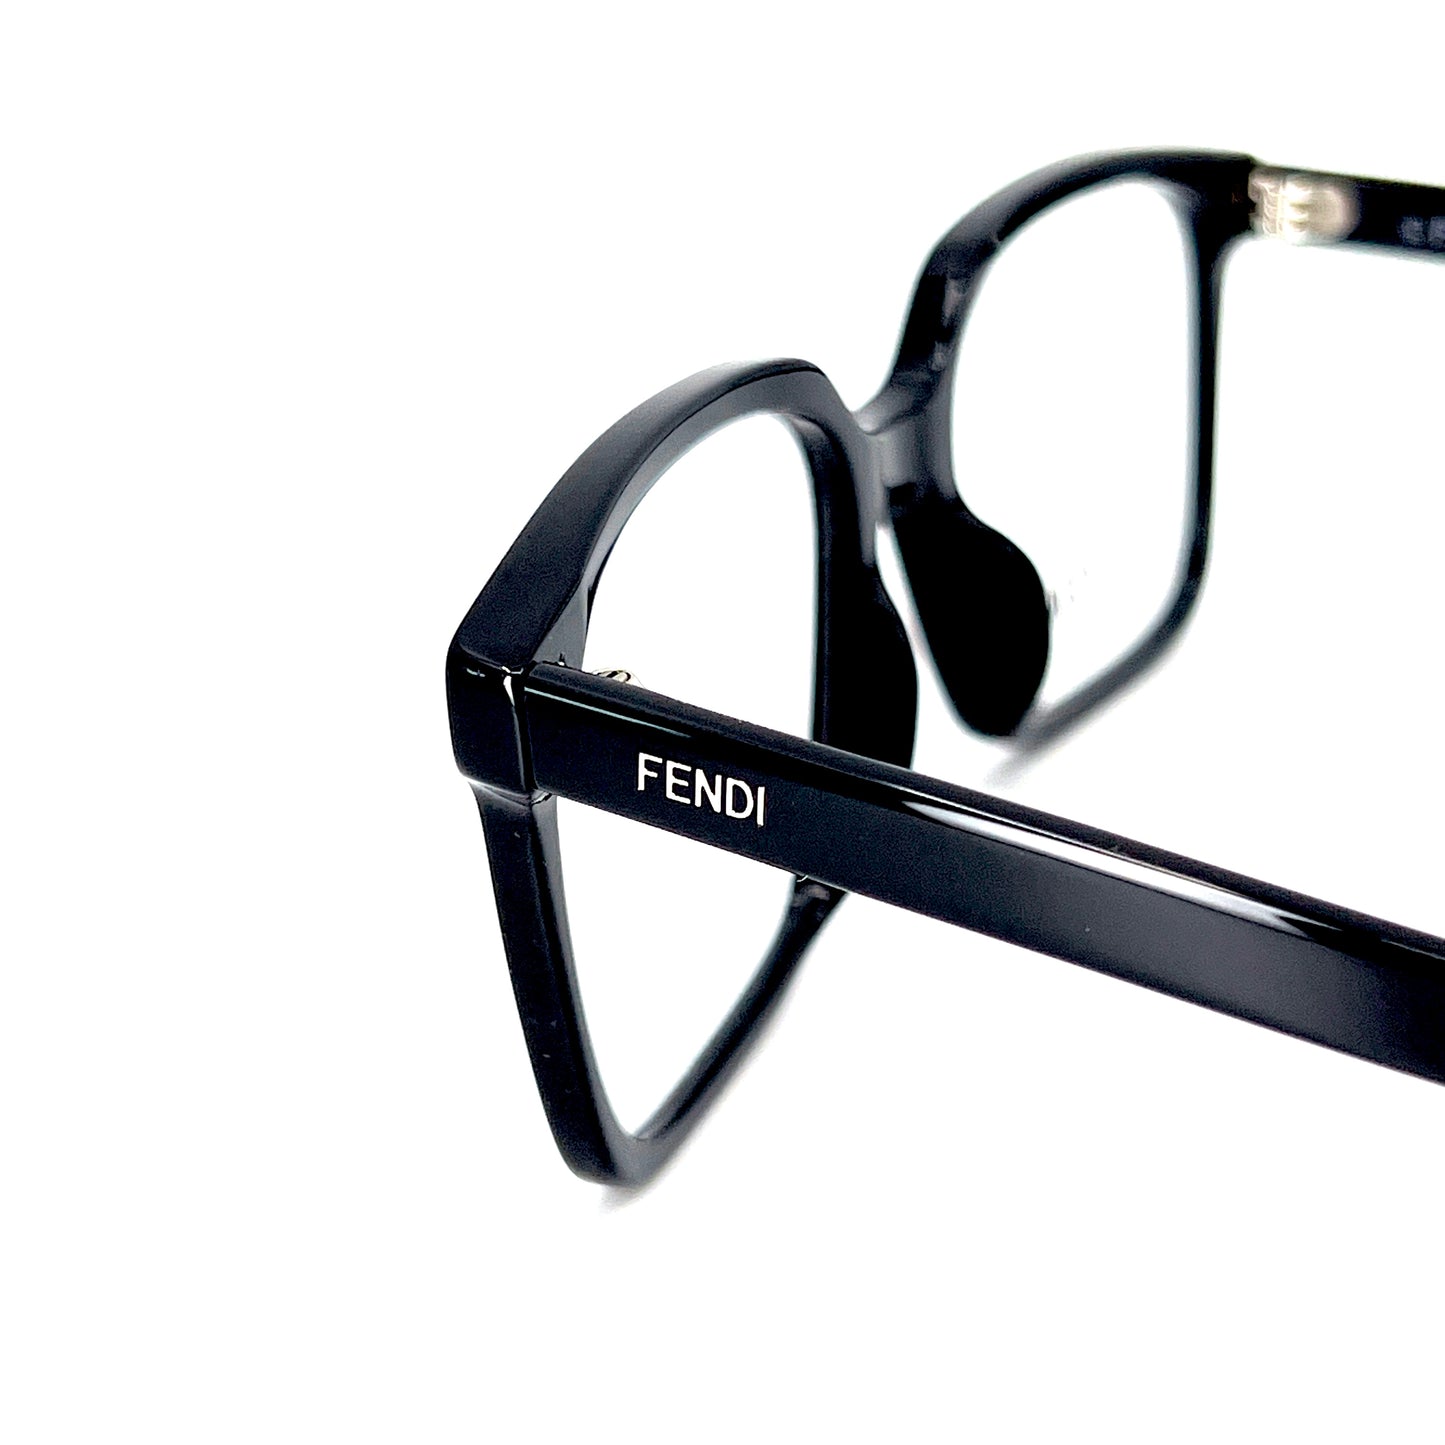 Gafas FENDI FE50032I 001